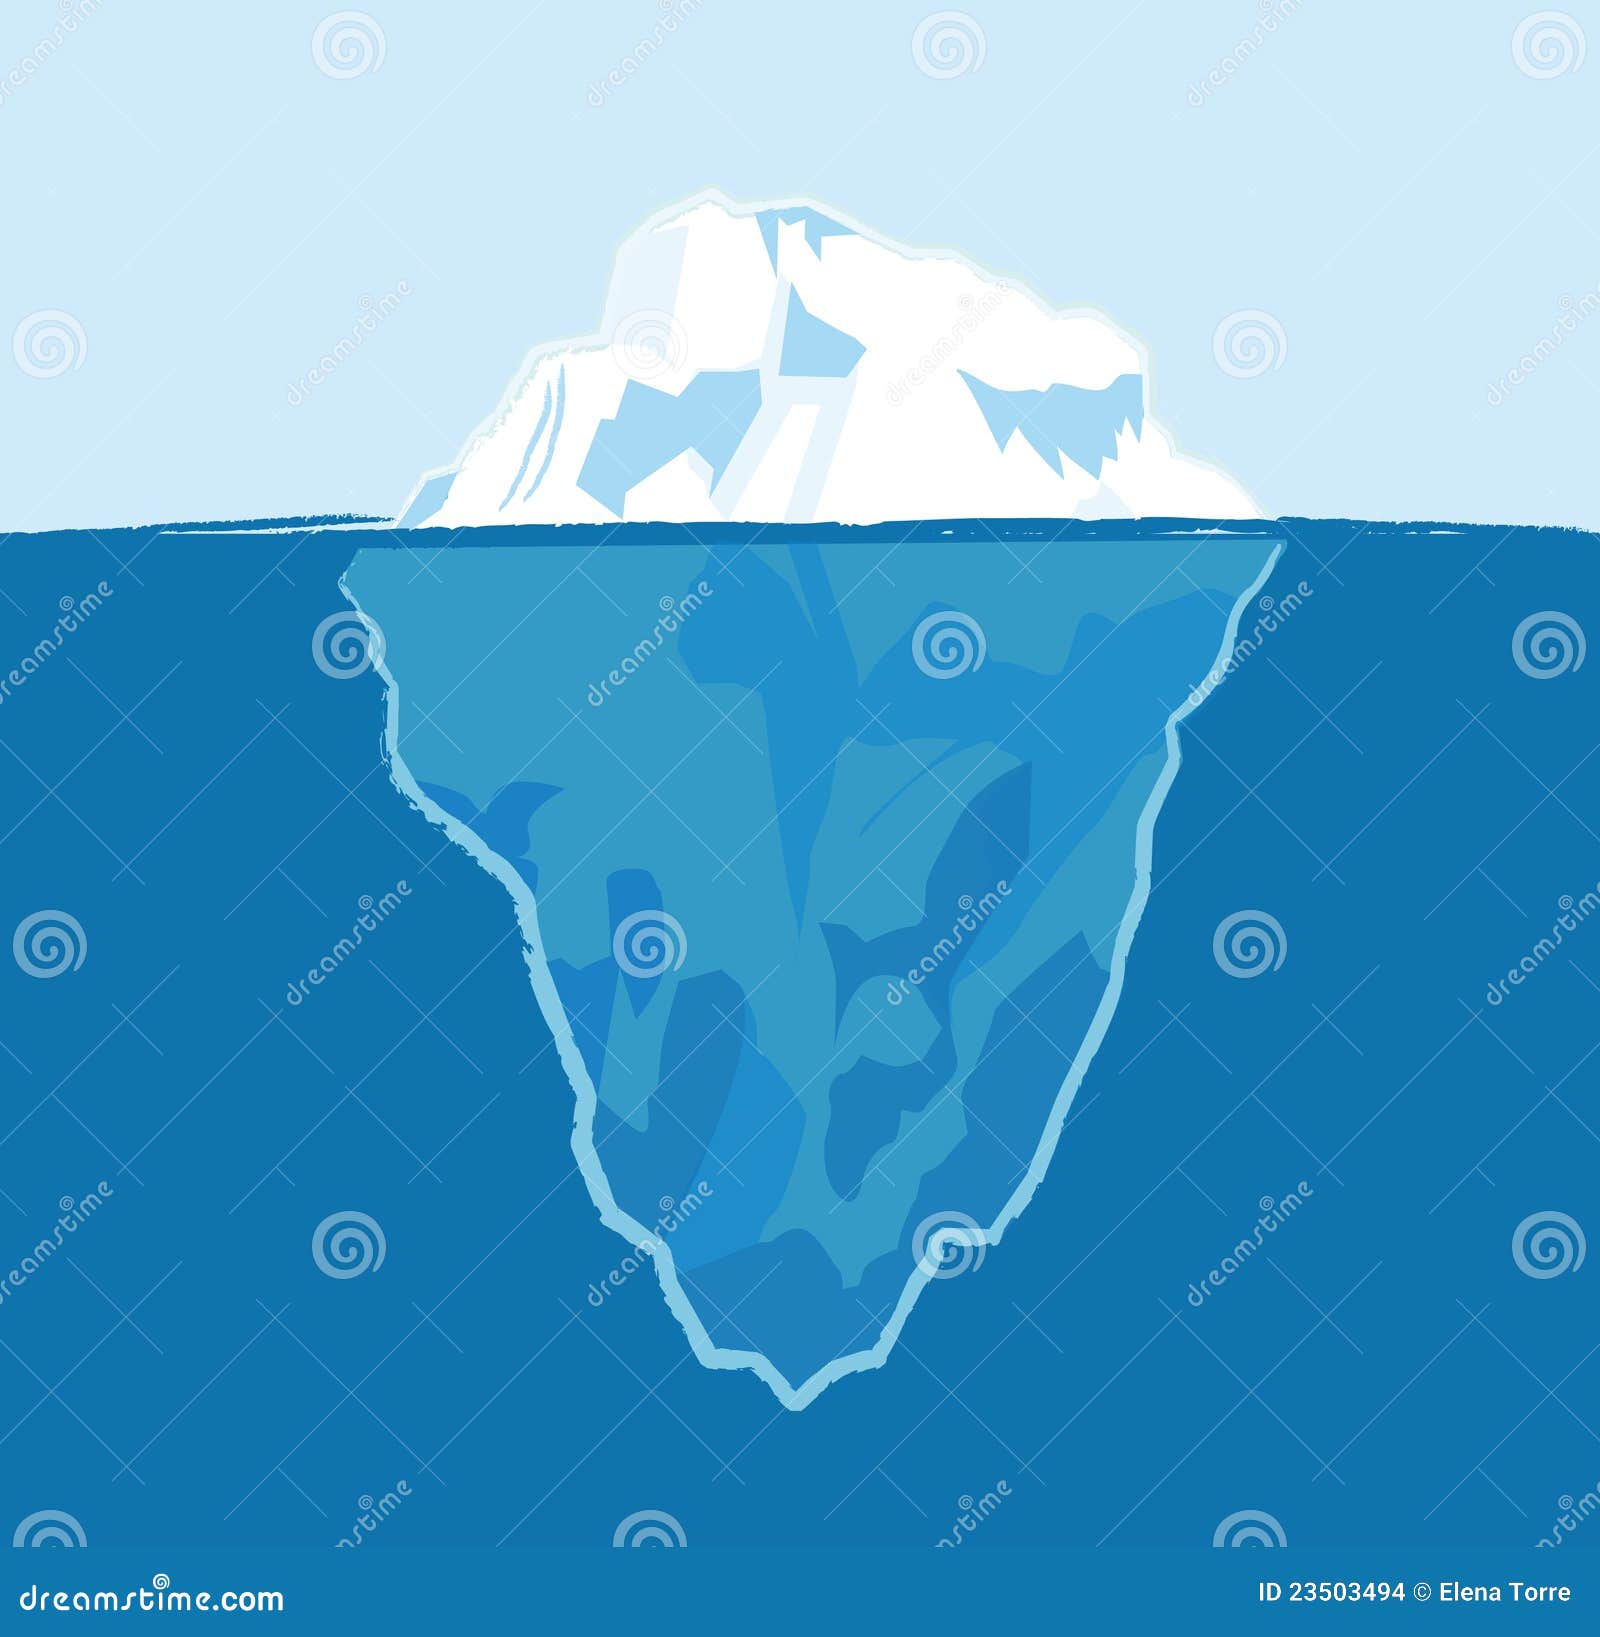 clipart iceberg - photo #35